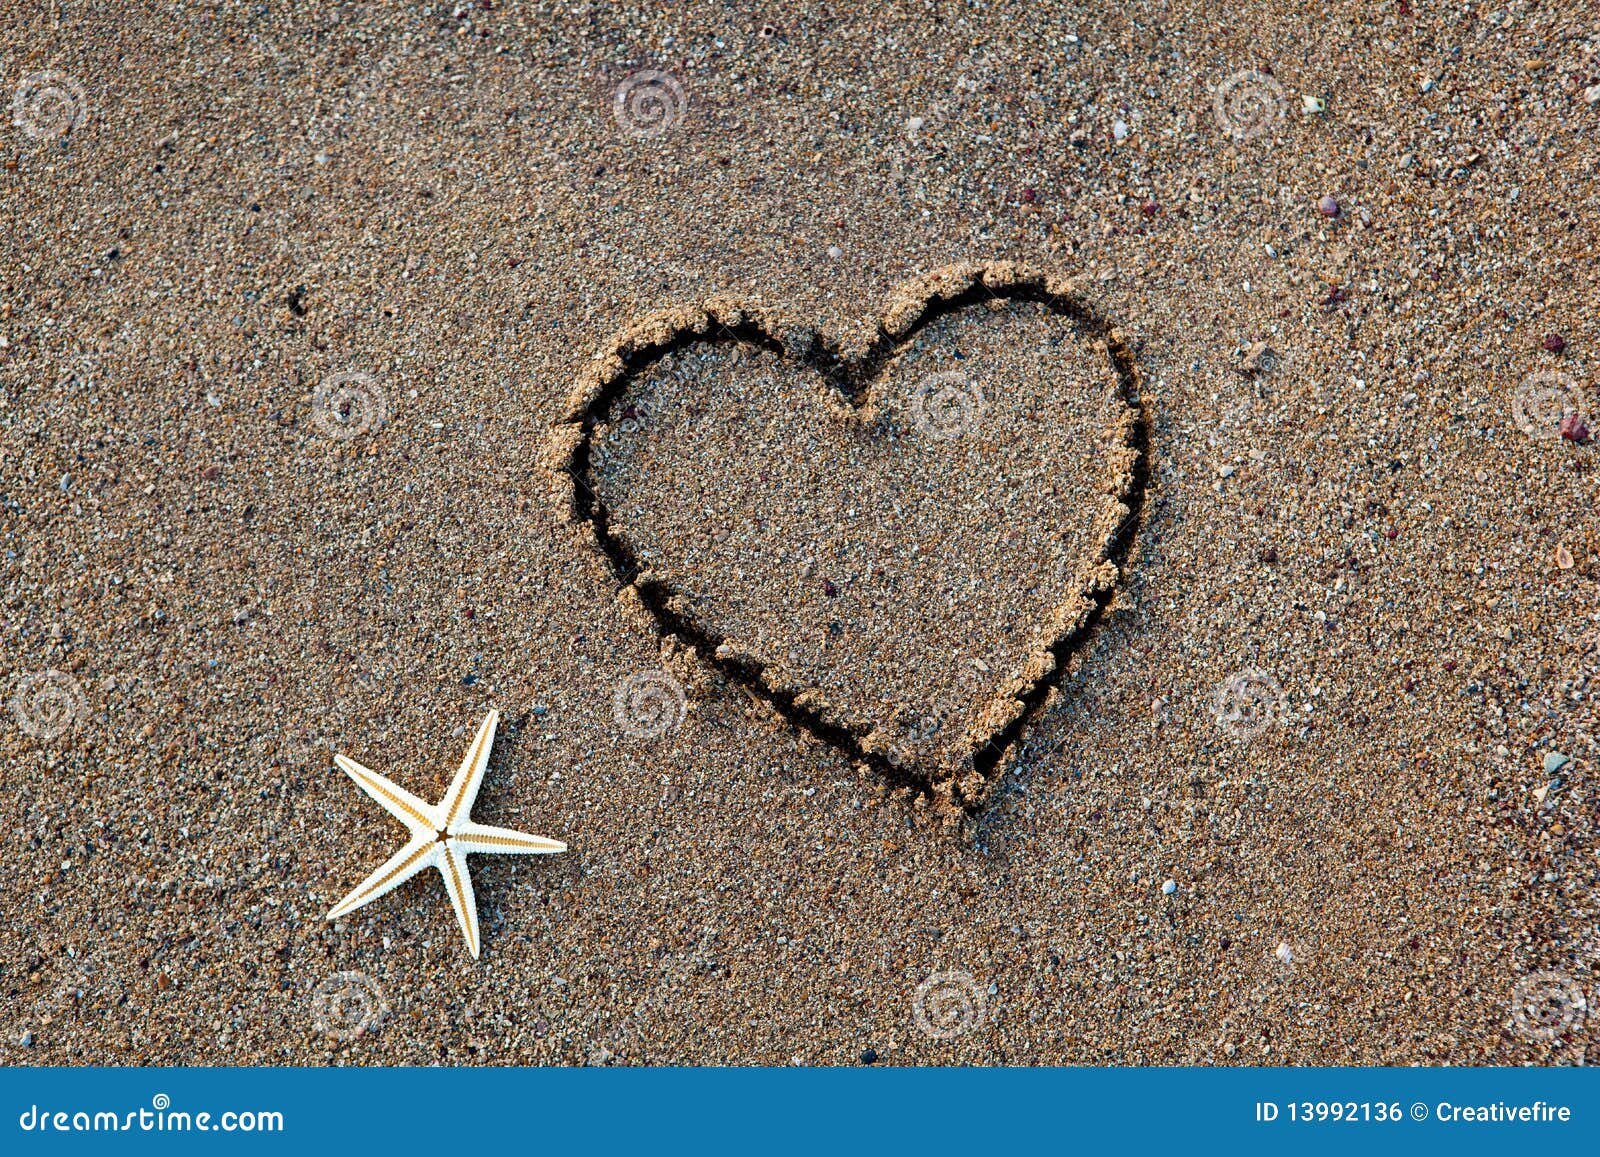 Heart and Starfish on Beach Stock Photo - Image of love, crustacean ...